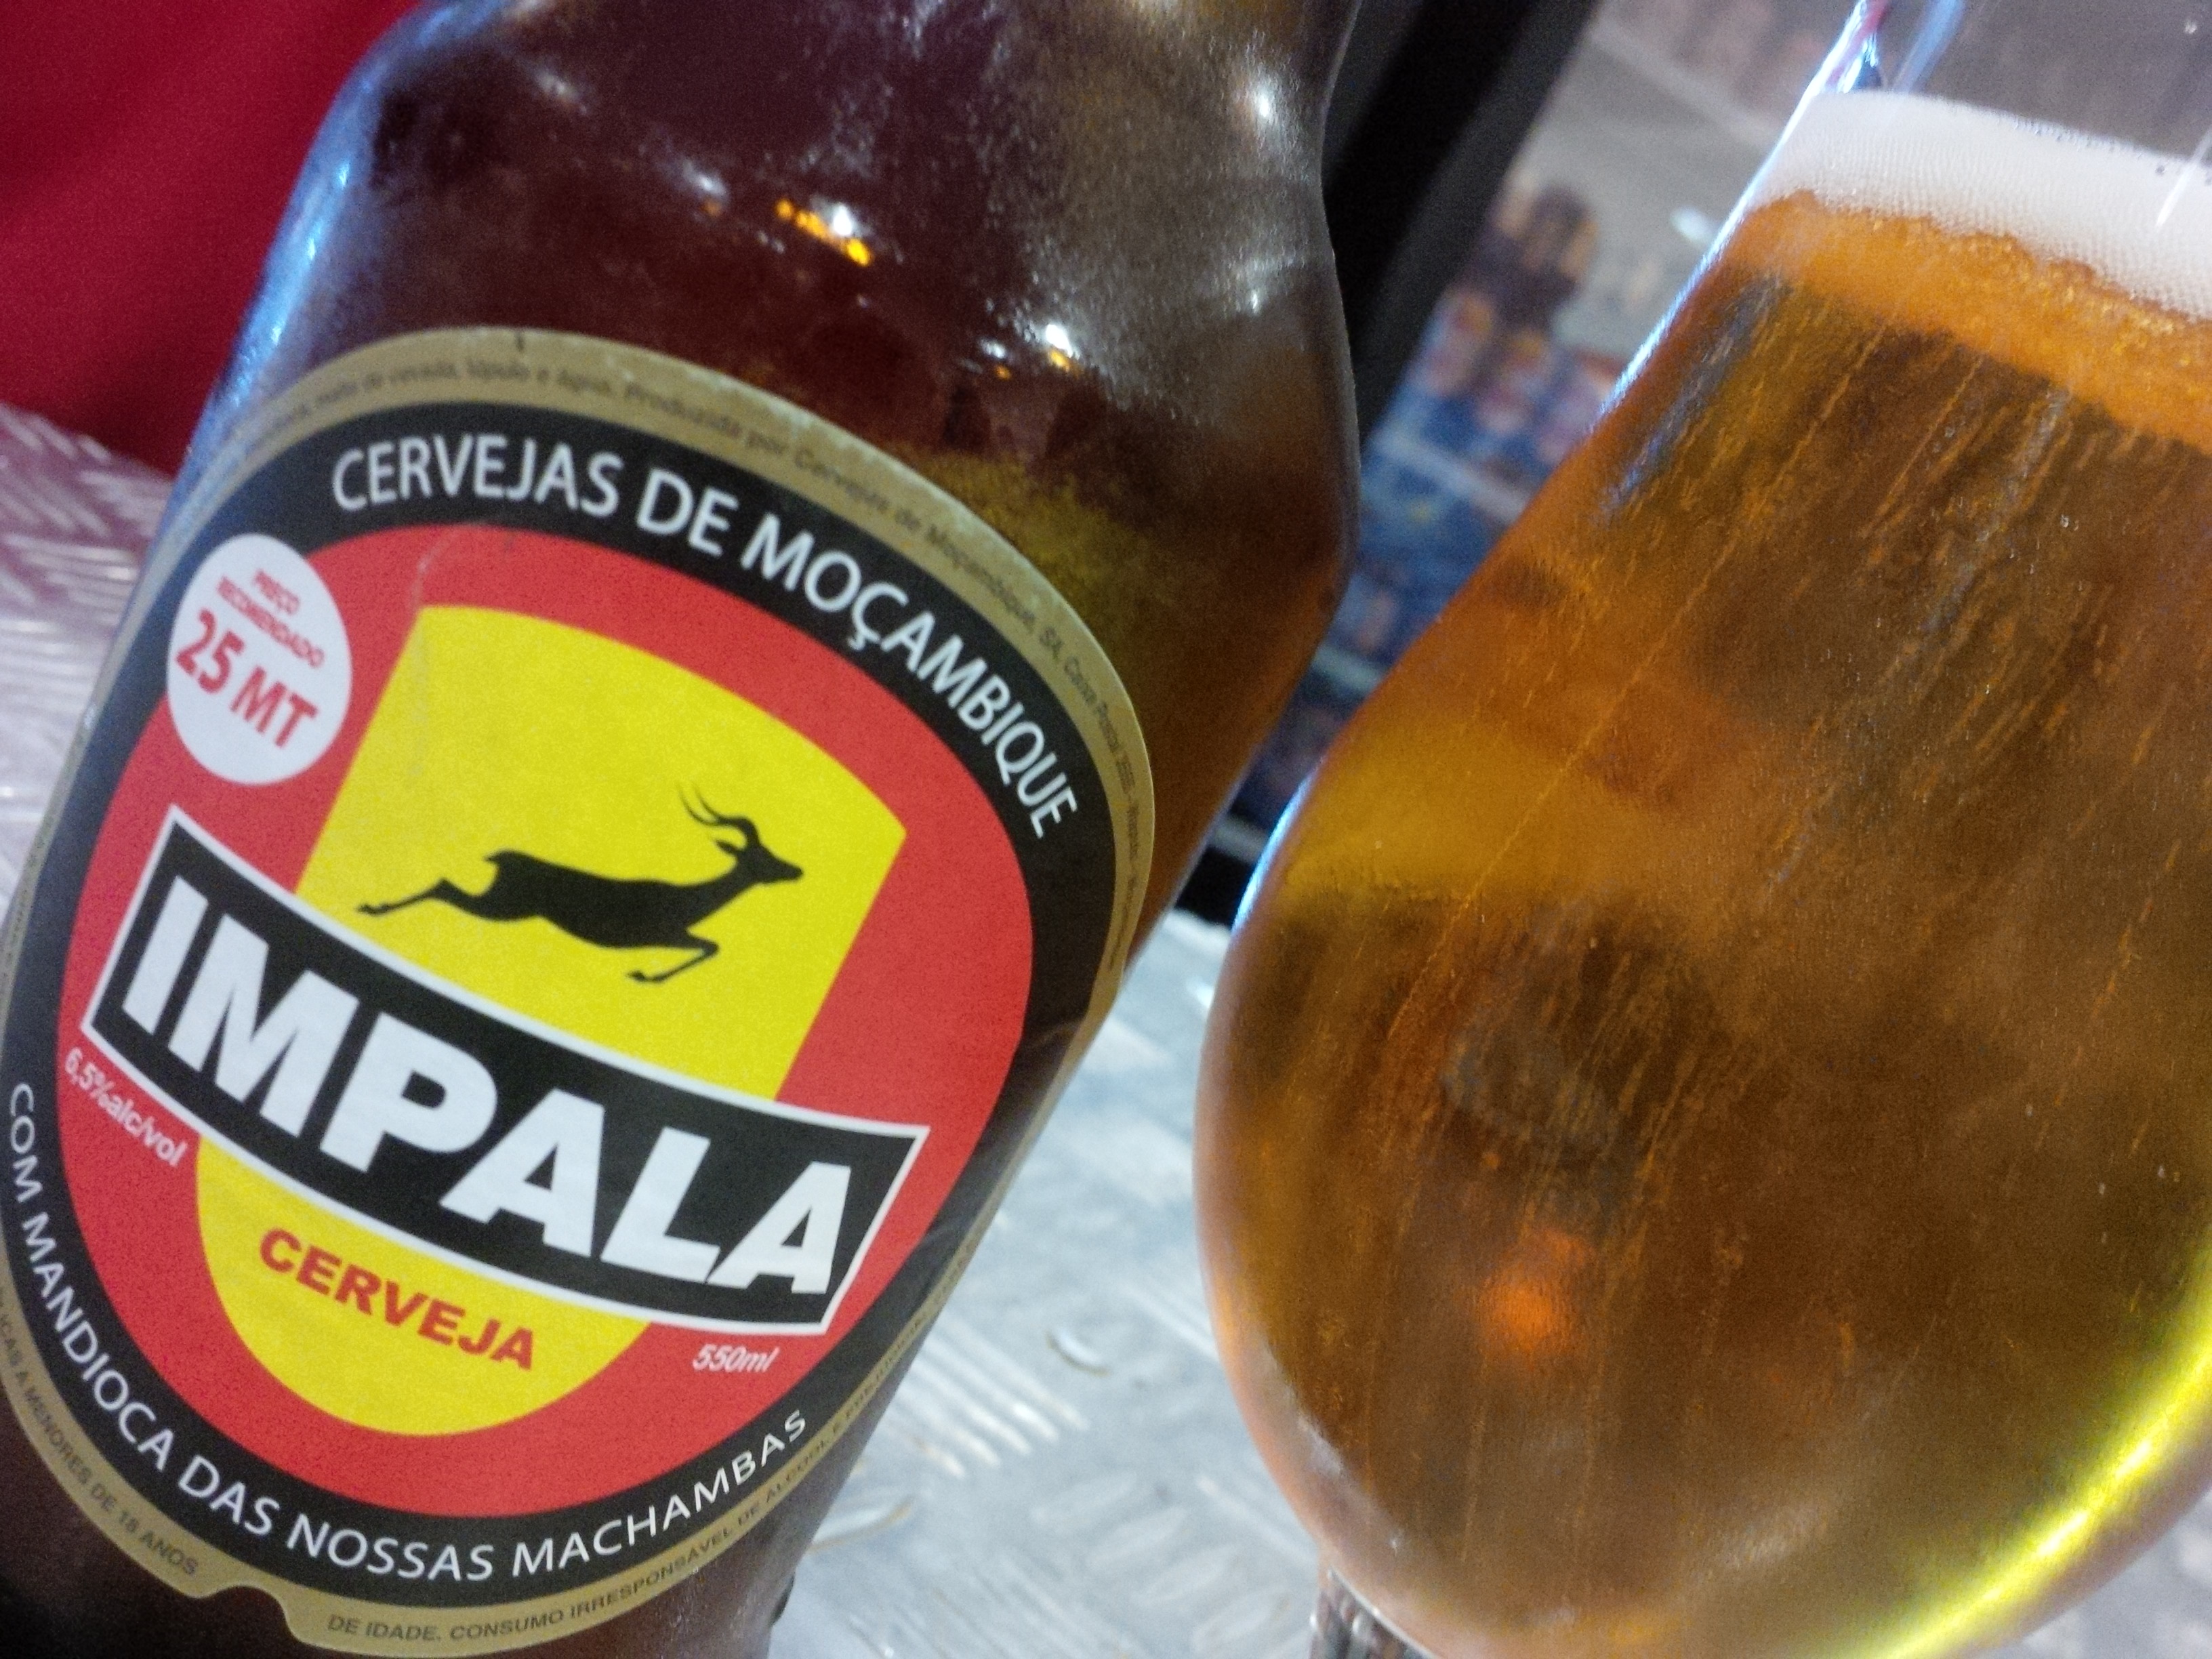 Beer review: Impala (cassava beer)